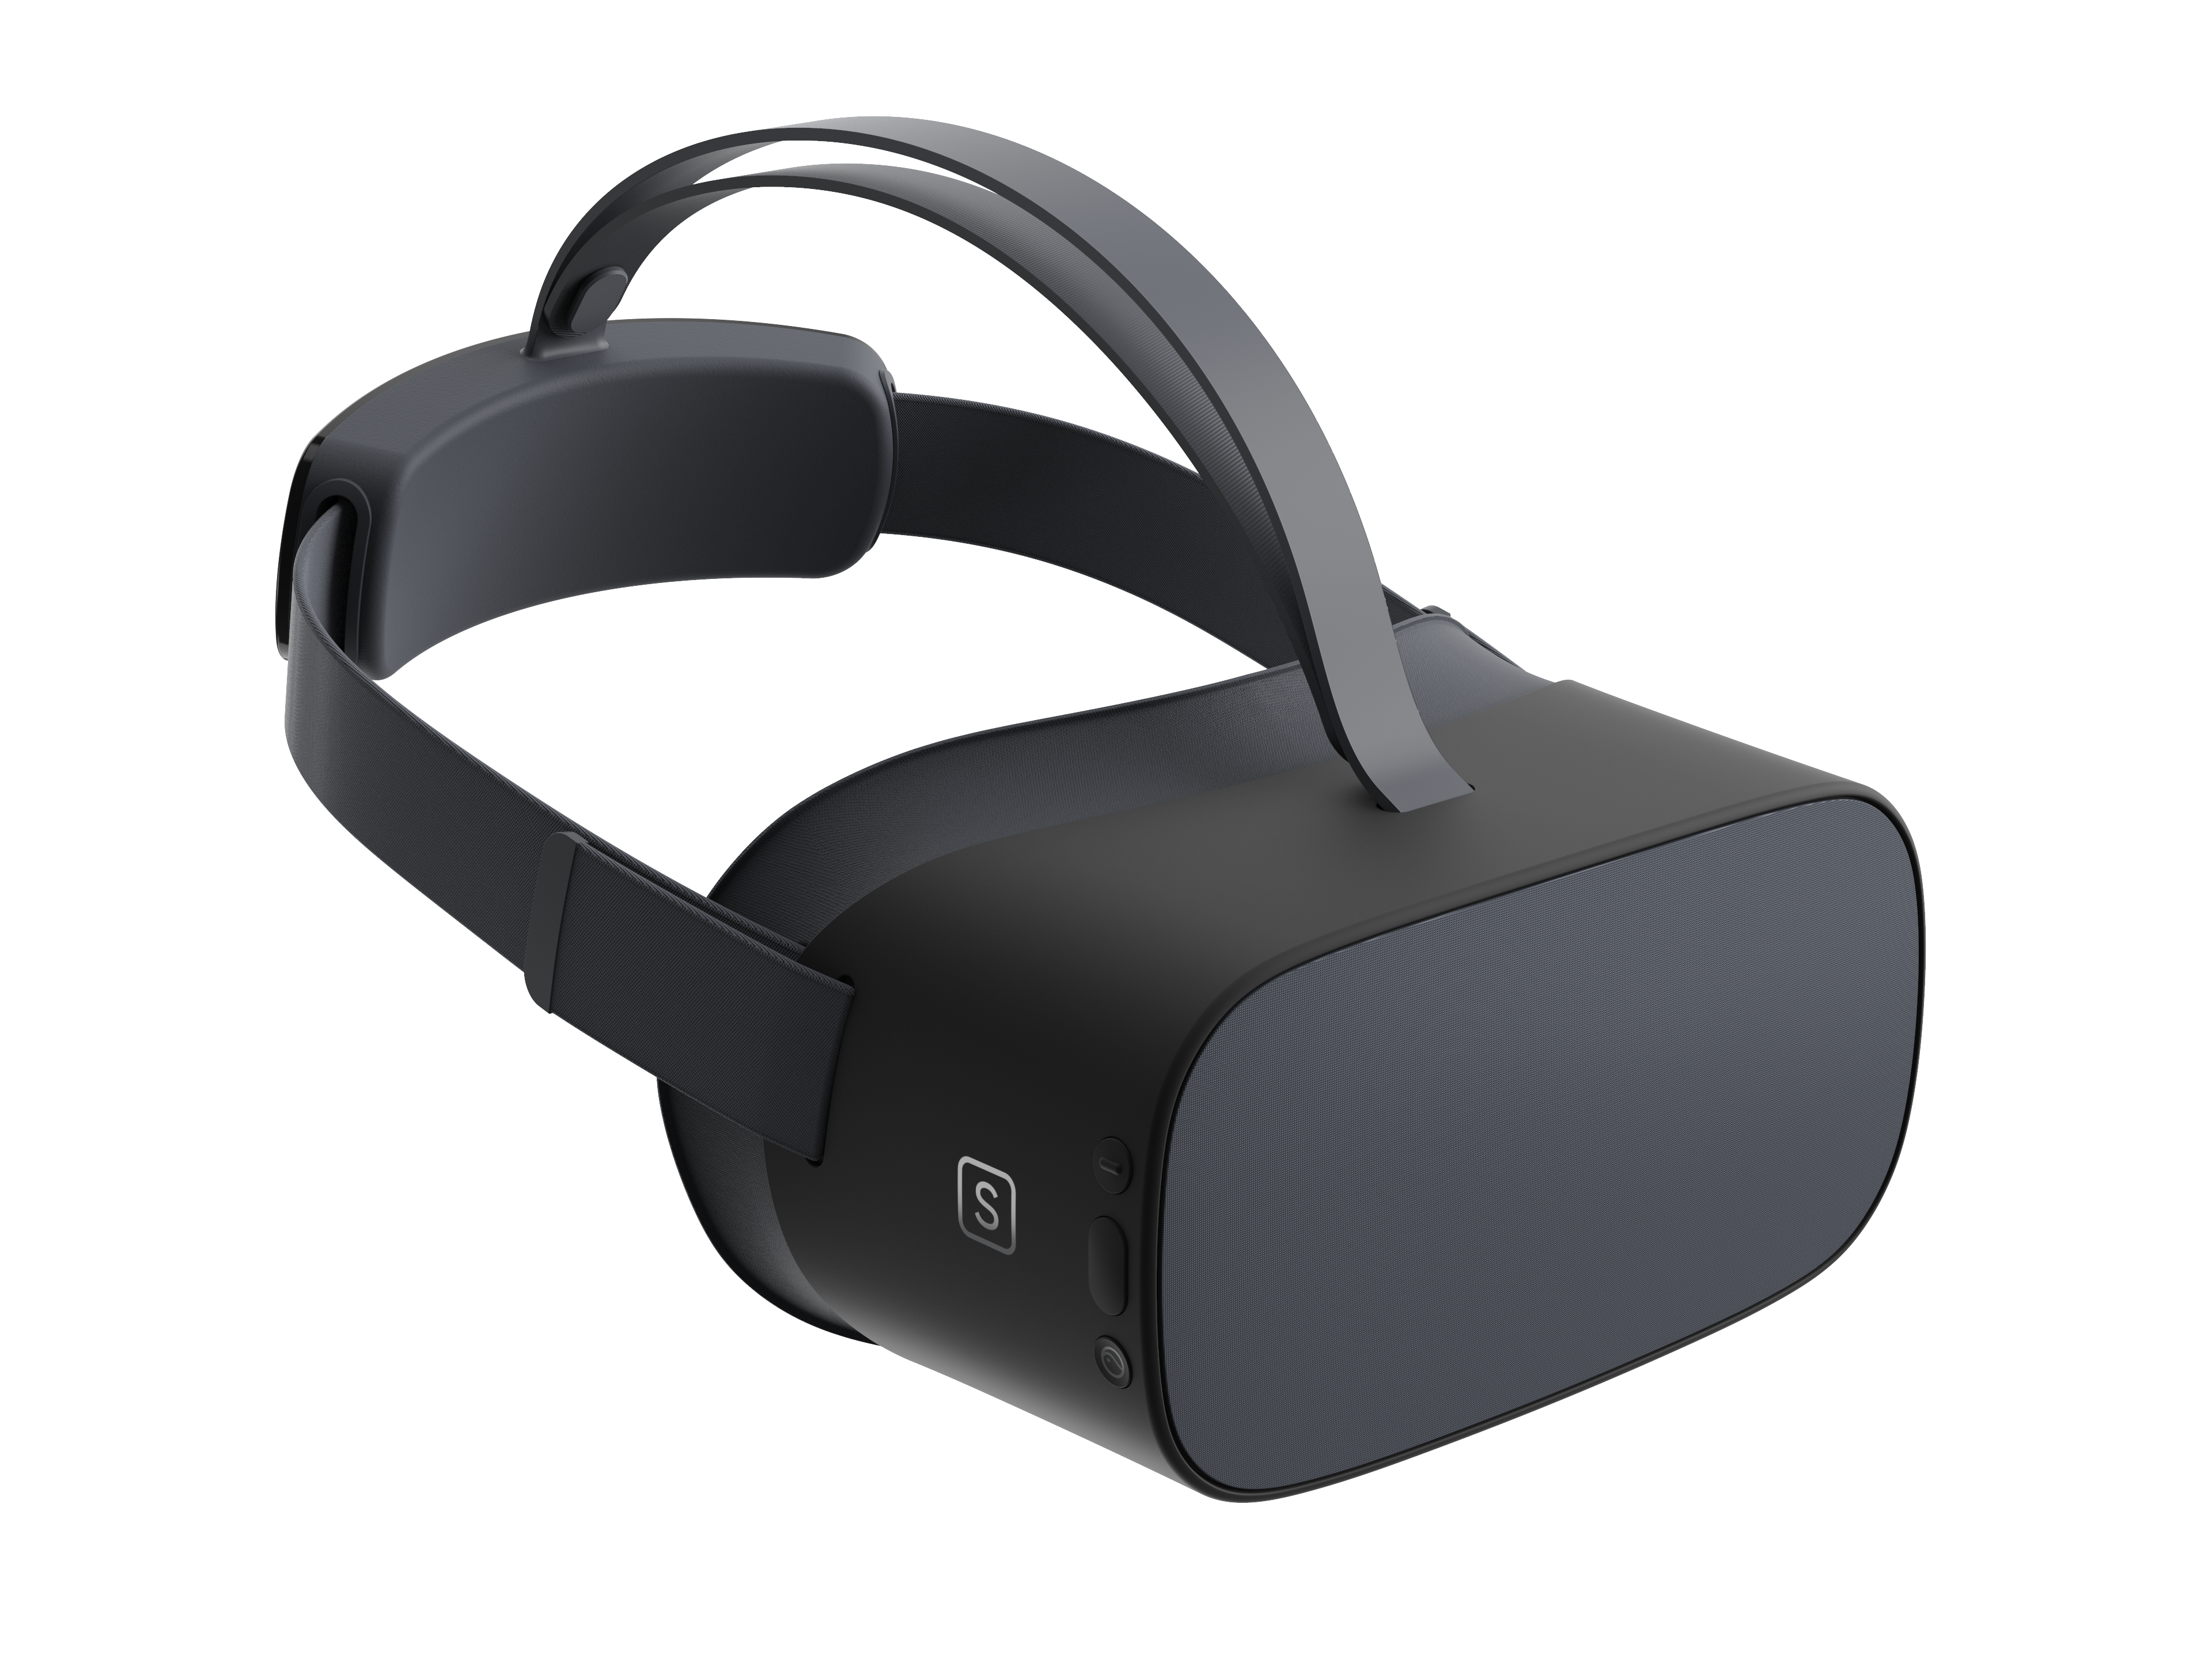 Pico G2 4KS Virtual Reality Headset